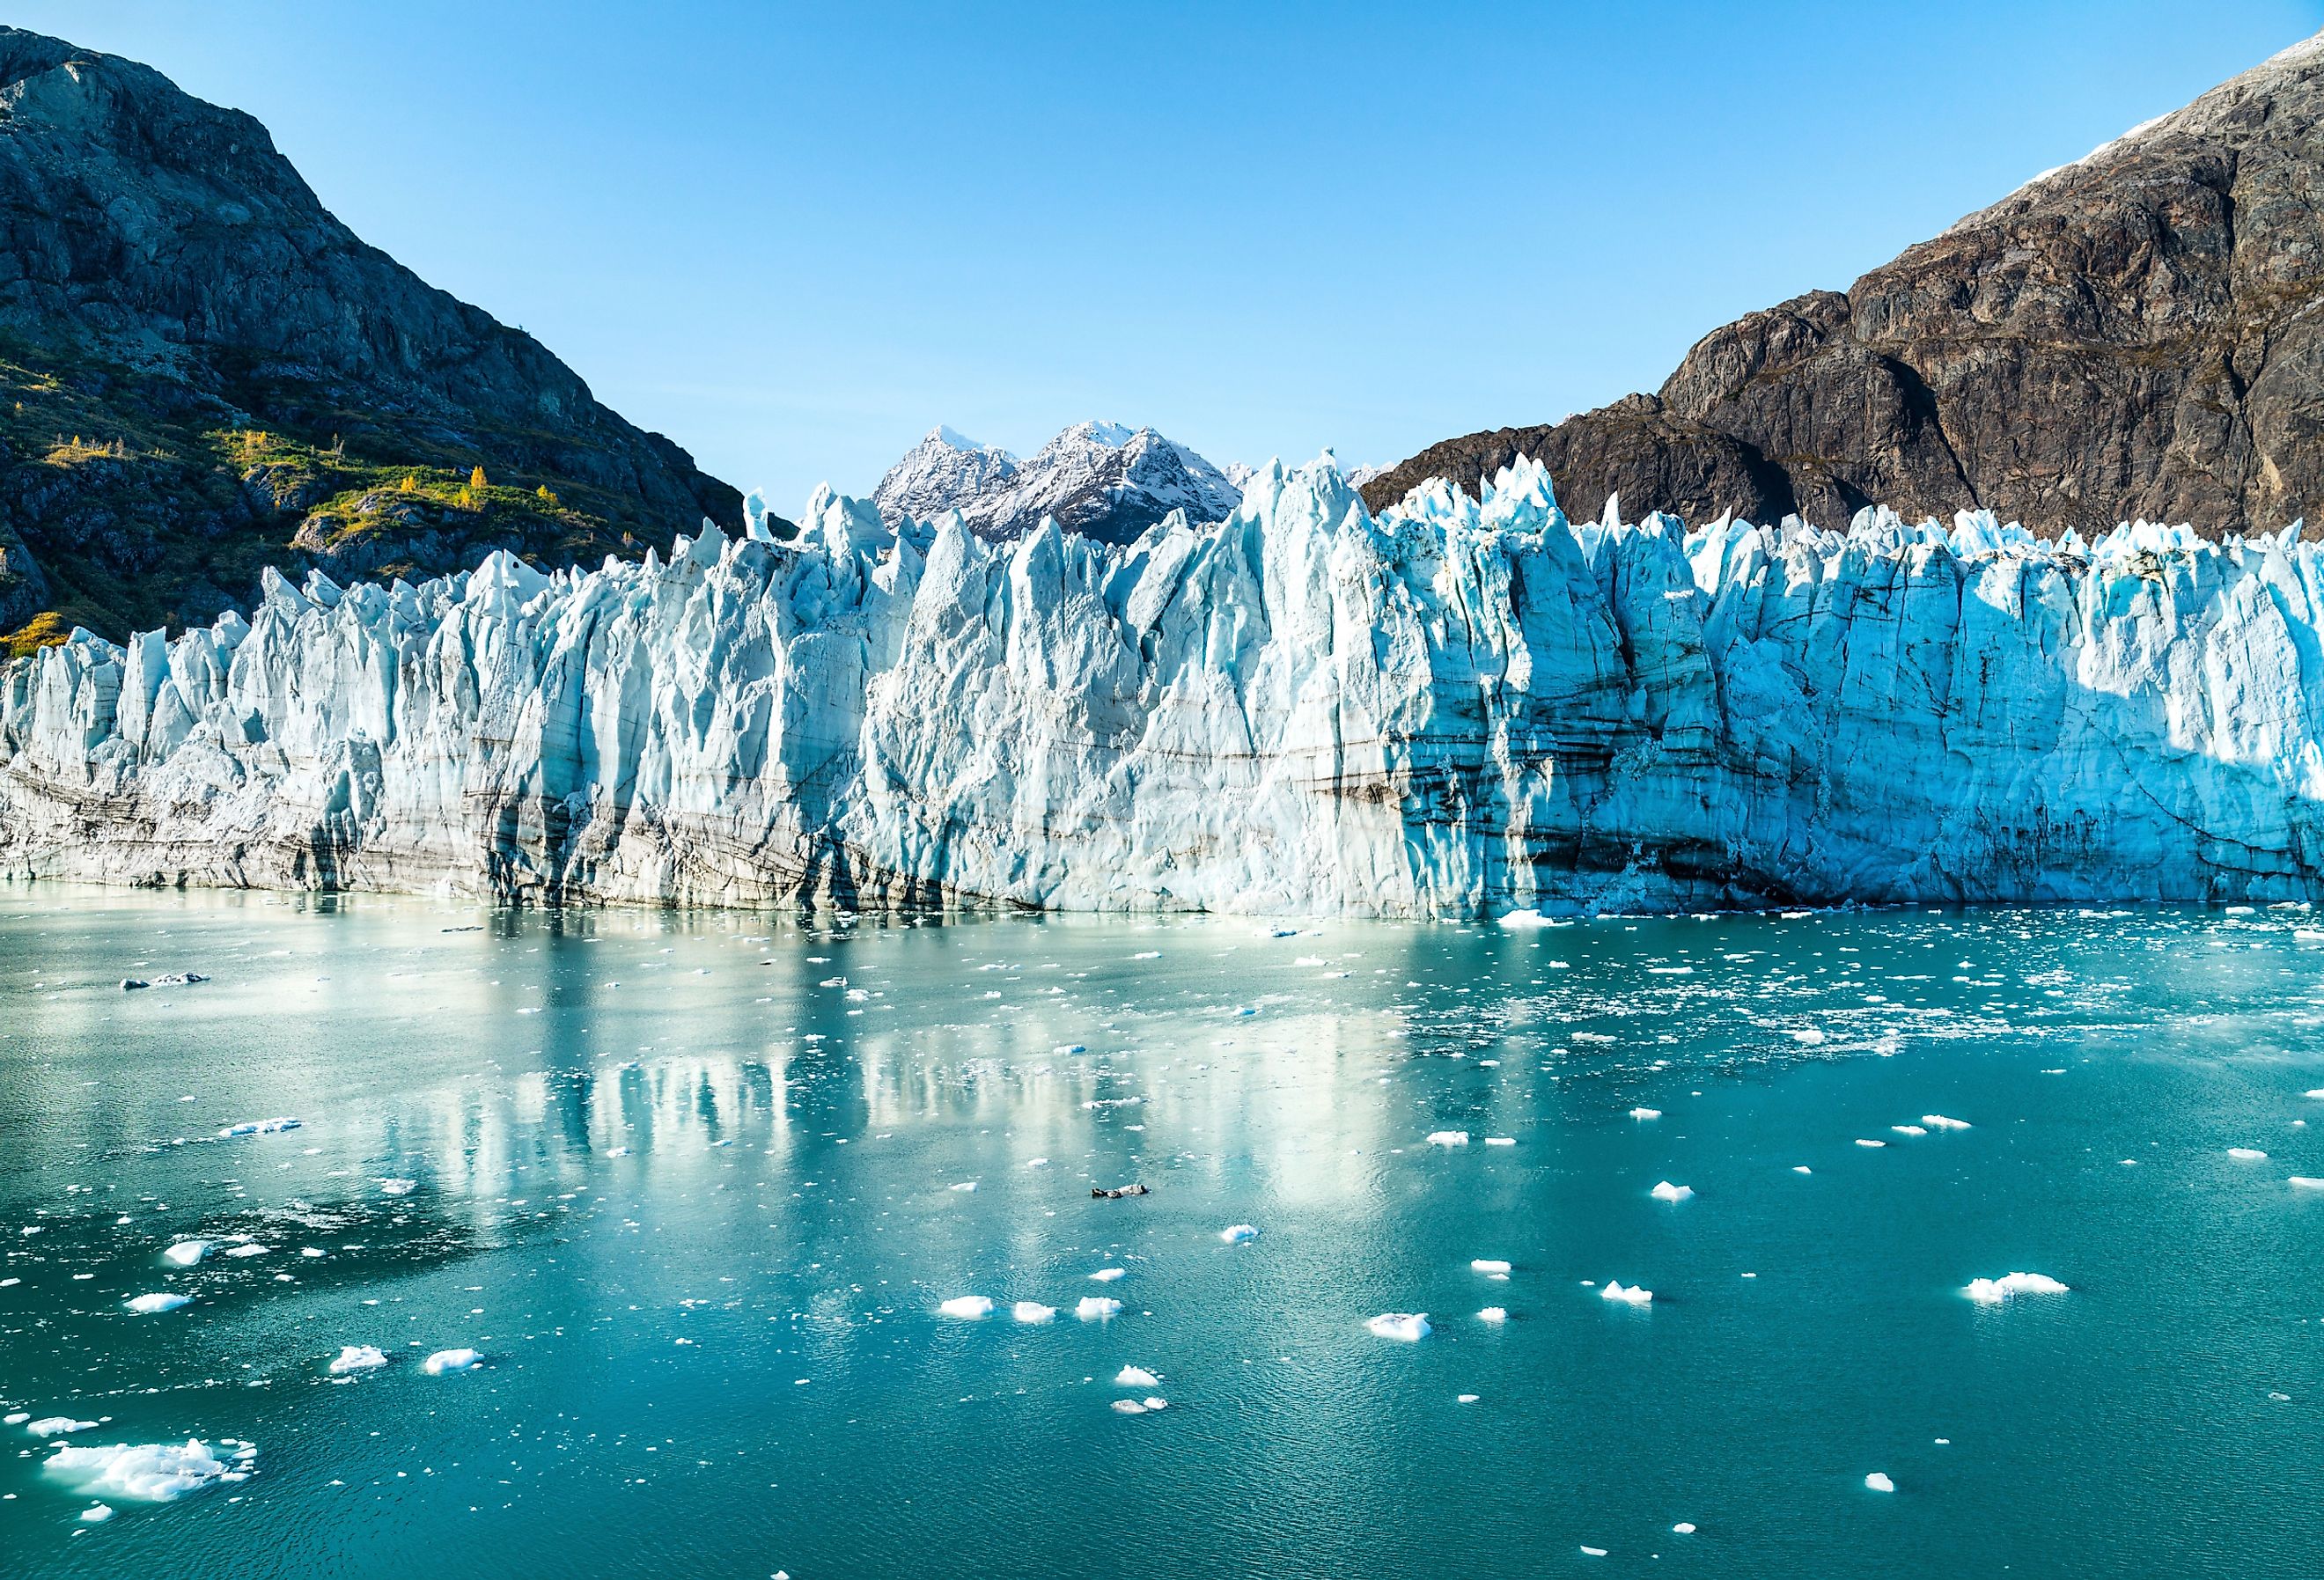 Alaska Glacier Bay landscape view from cruise ship holiday travel. Image credit Maridav via Shutterstock.